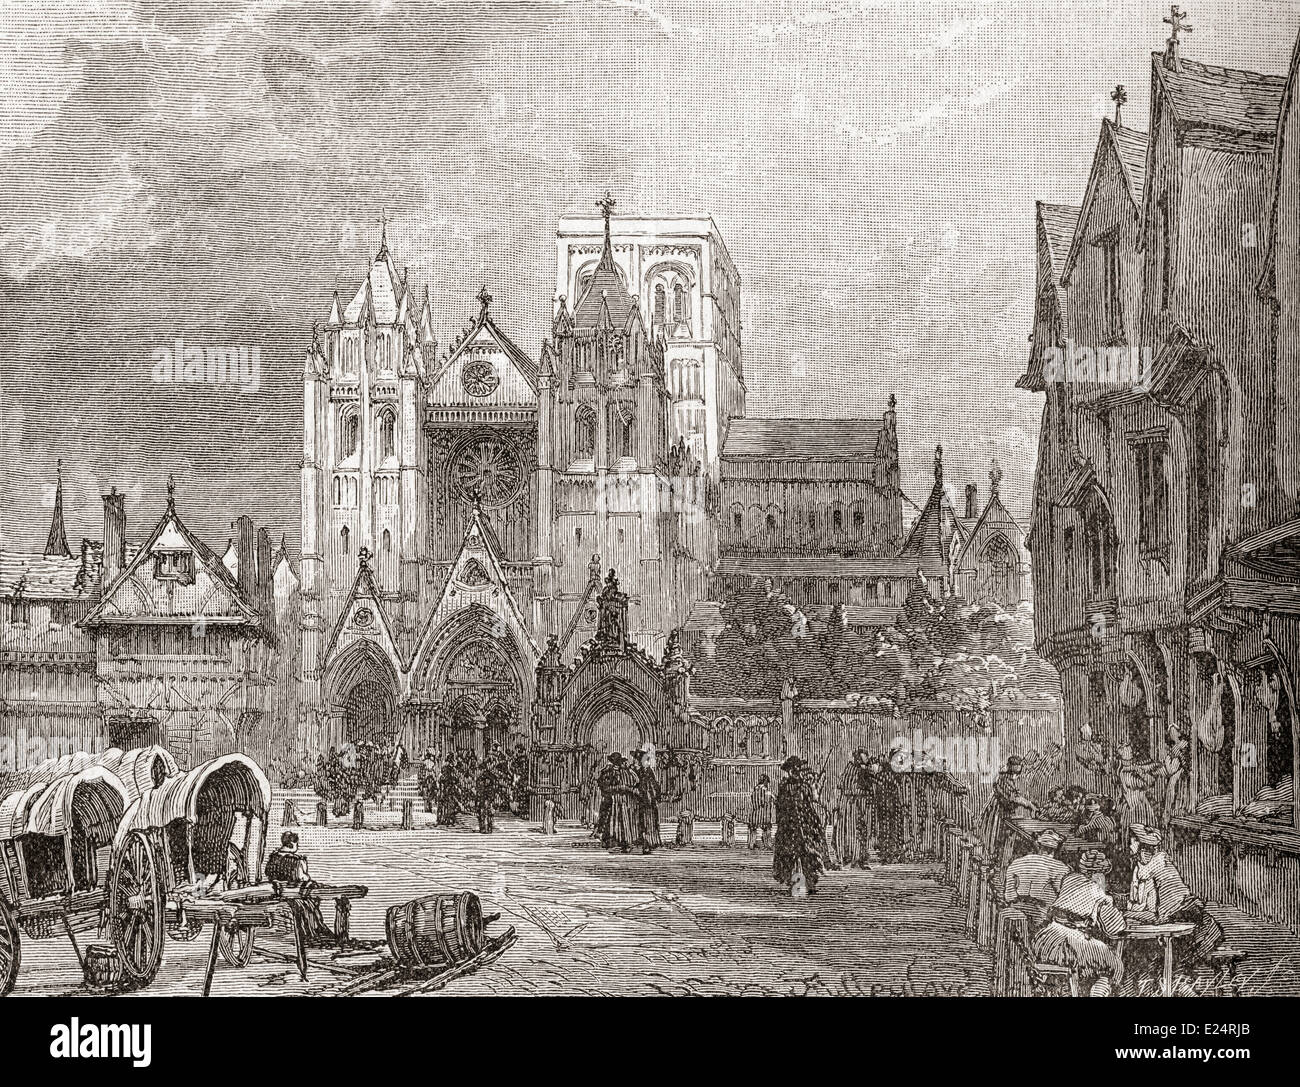 The place of Martyrdom, Old Smithfield Market, London, England, 16th century. Stock Photo